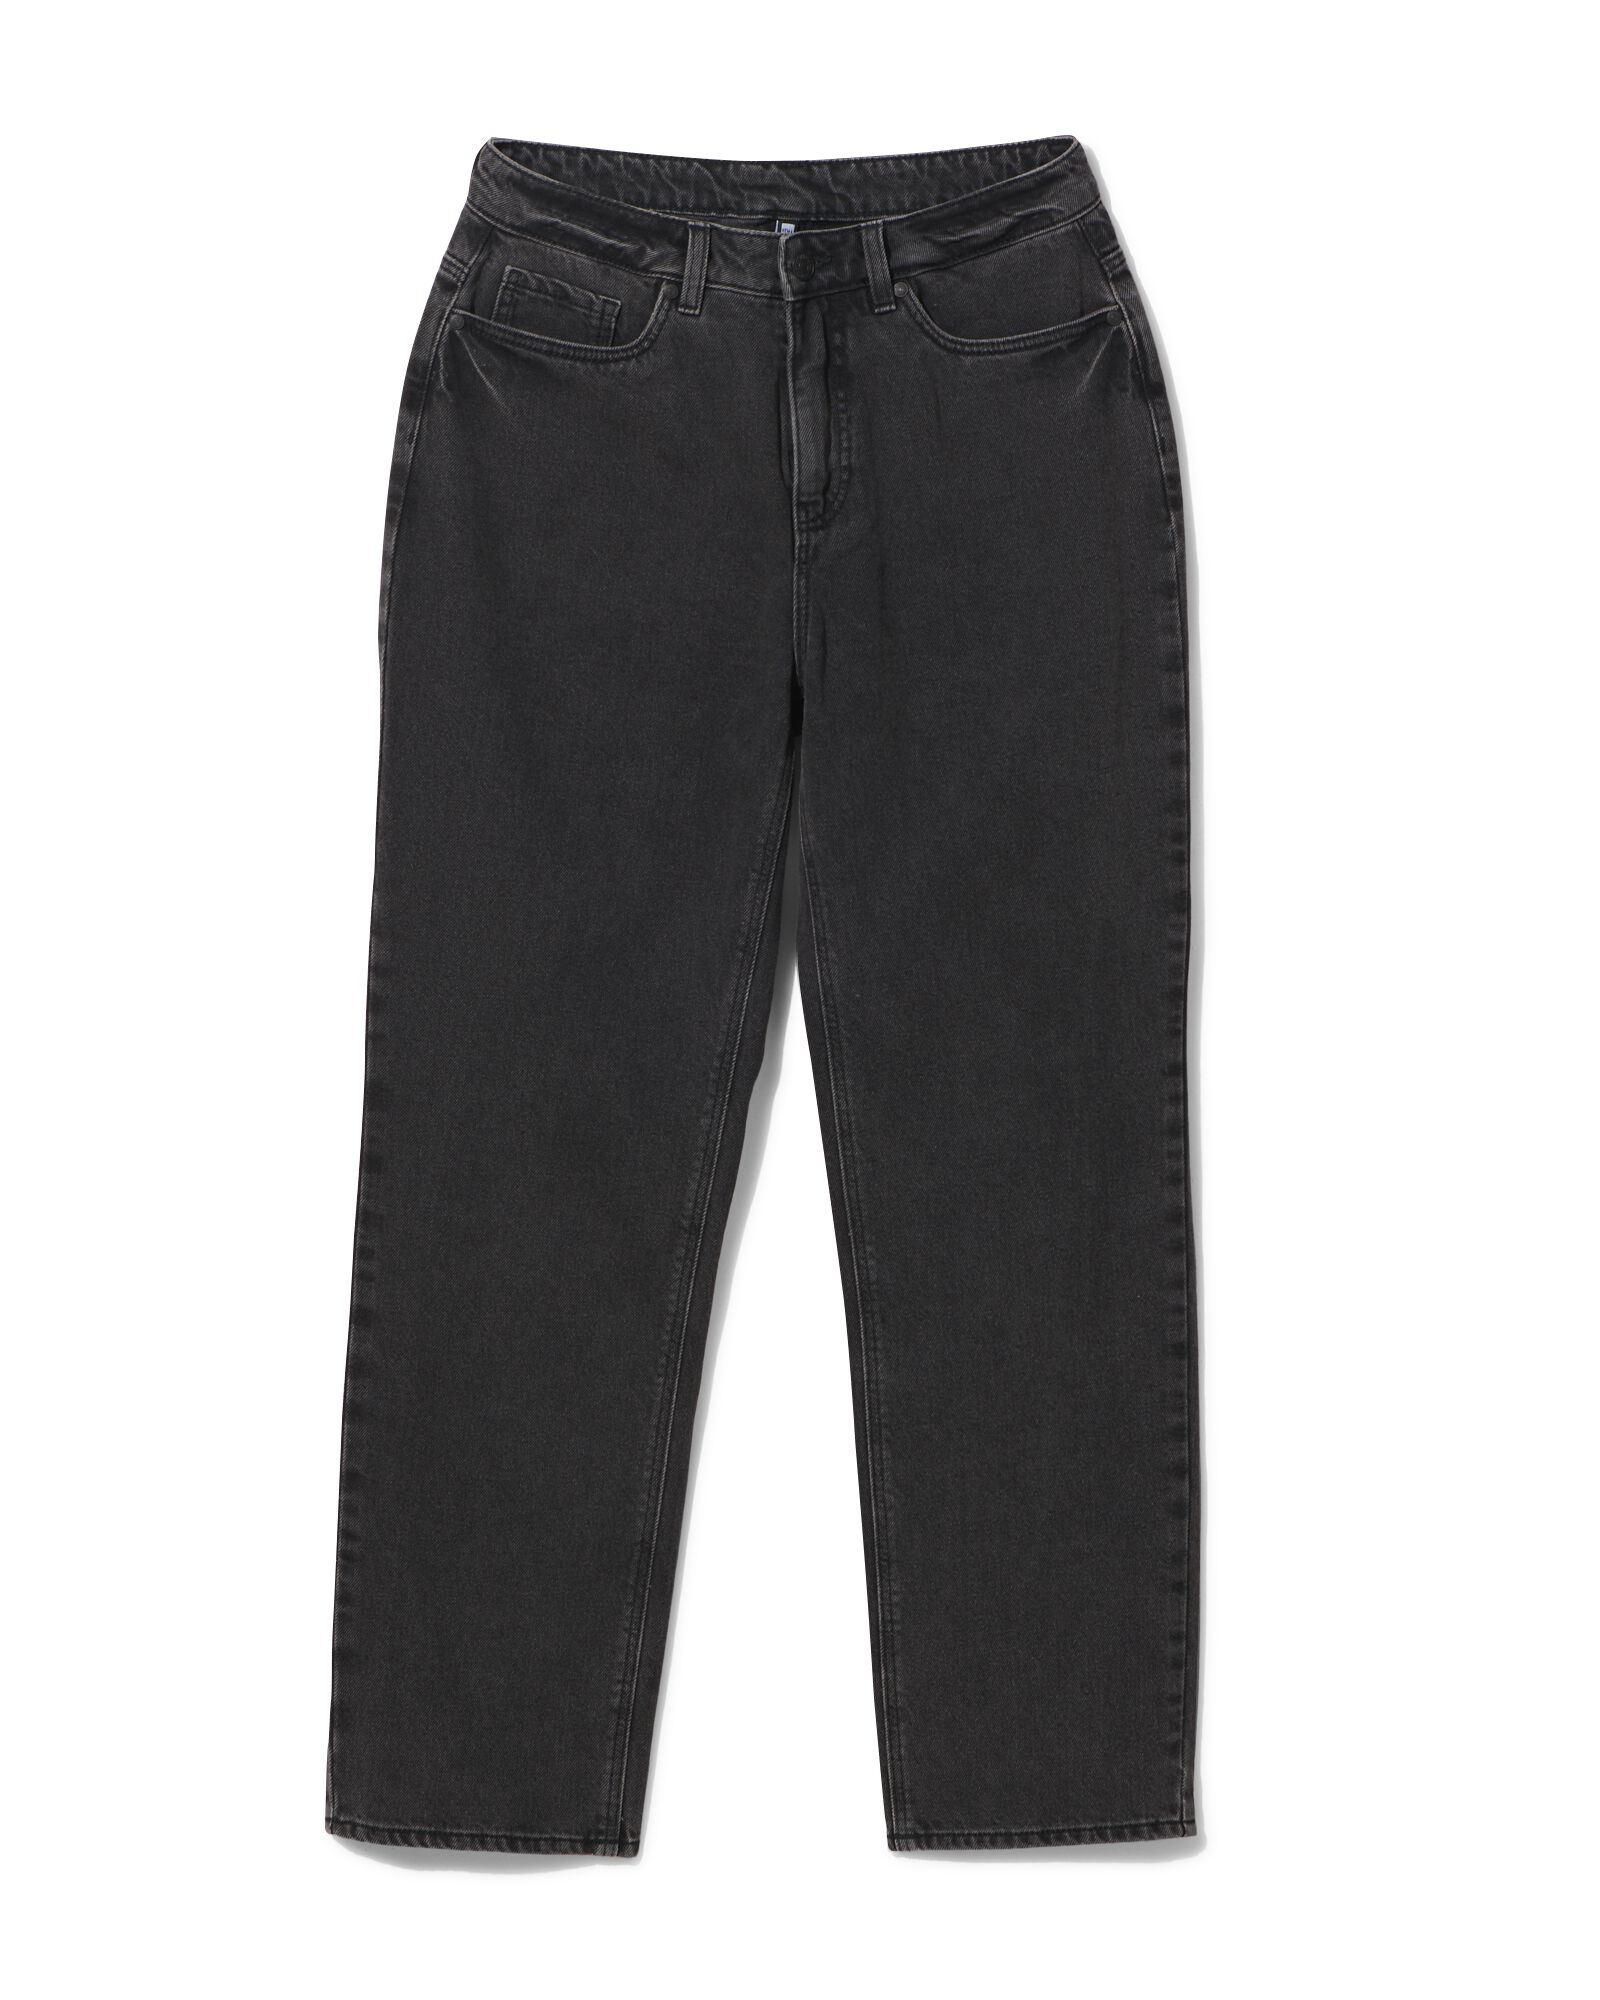 Damen-Jeans, Straight Fit dunkelgrau 38 - 36319982 - HEMA